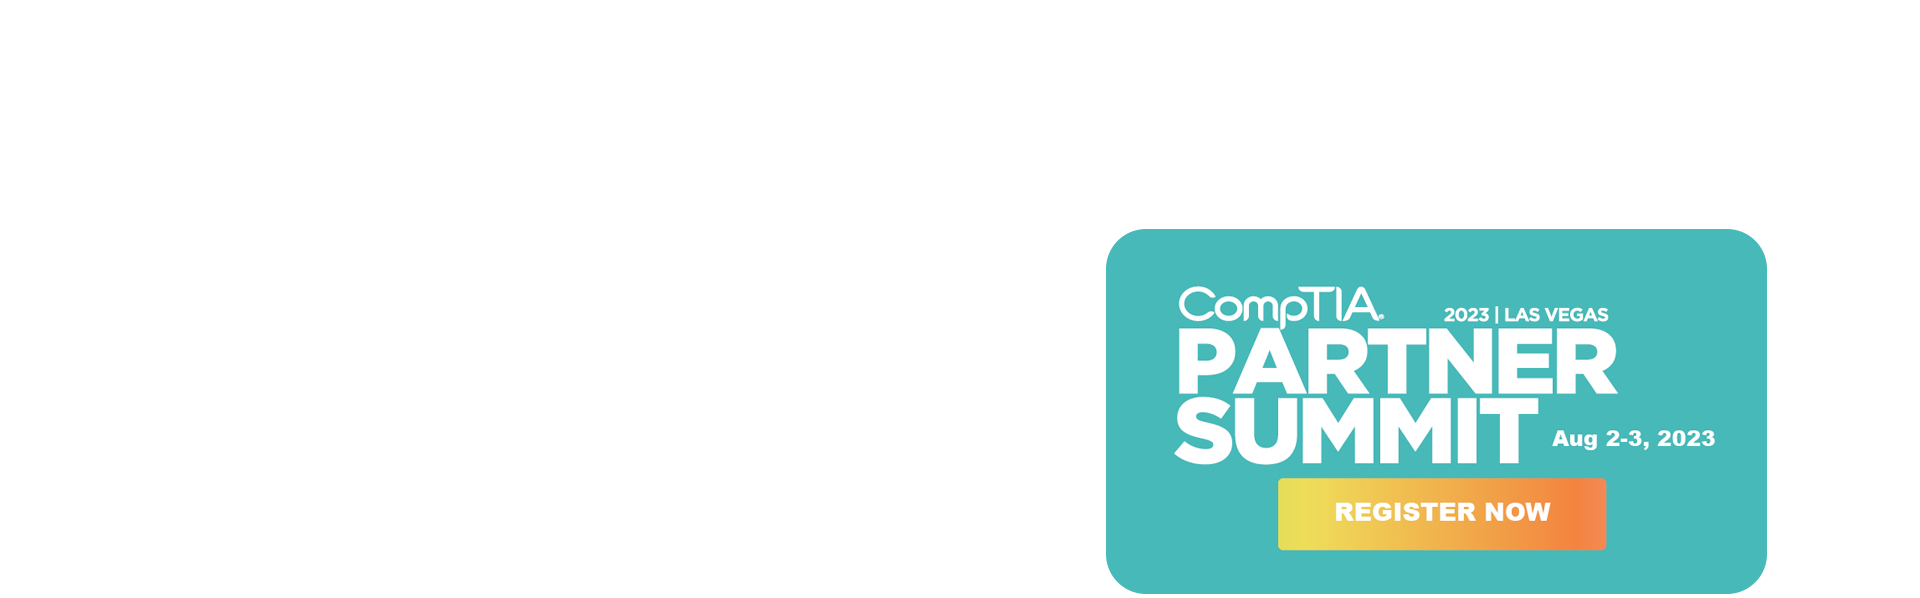 Register for Partner Summit 2023